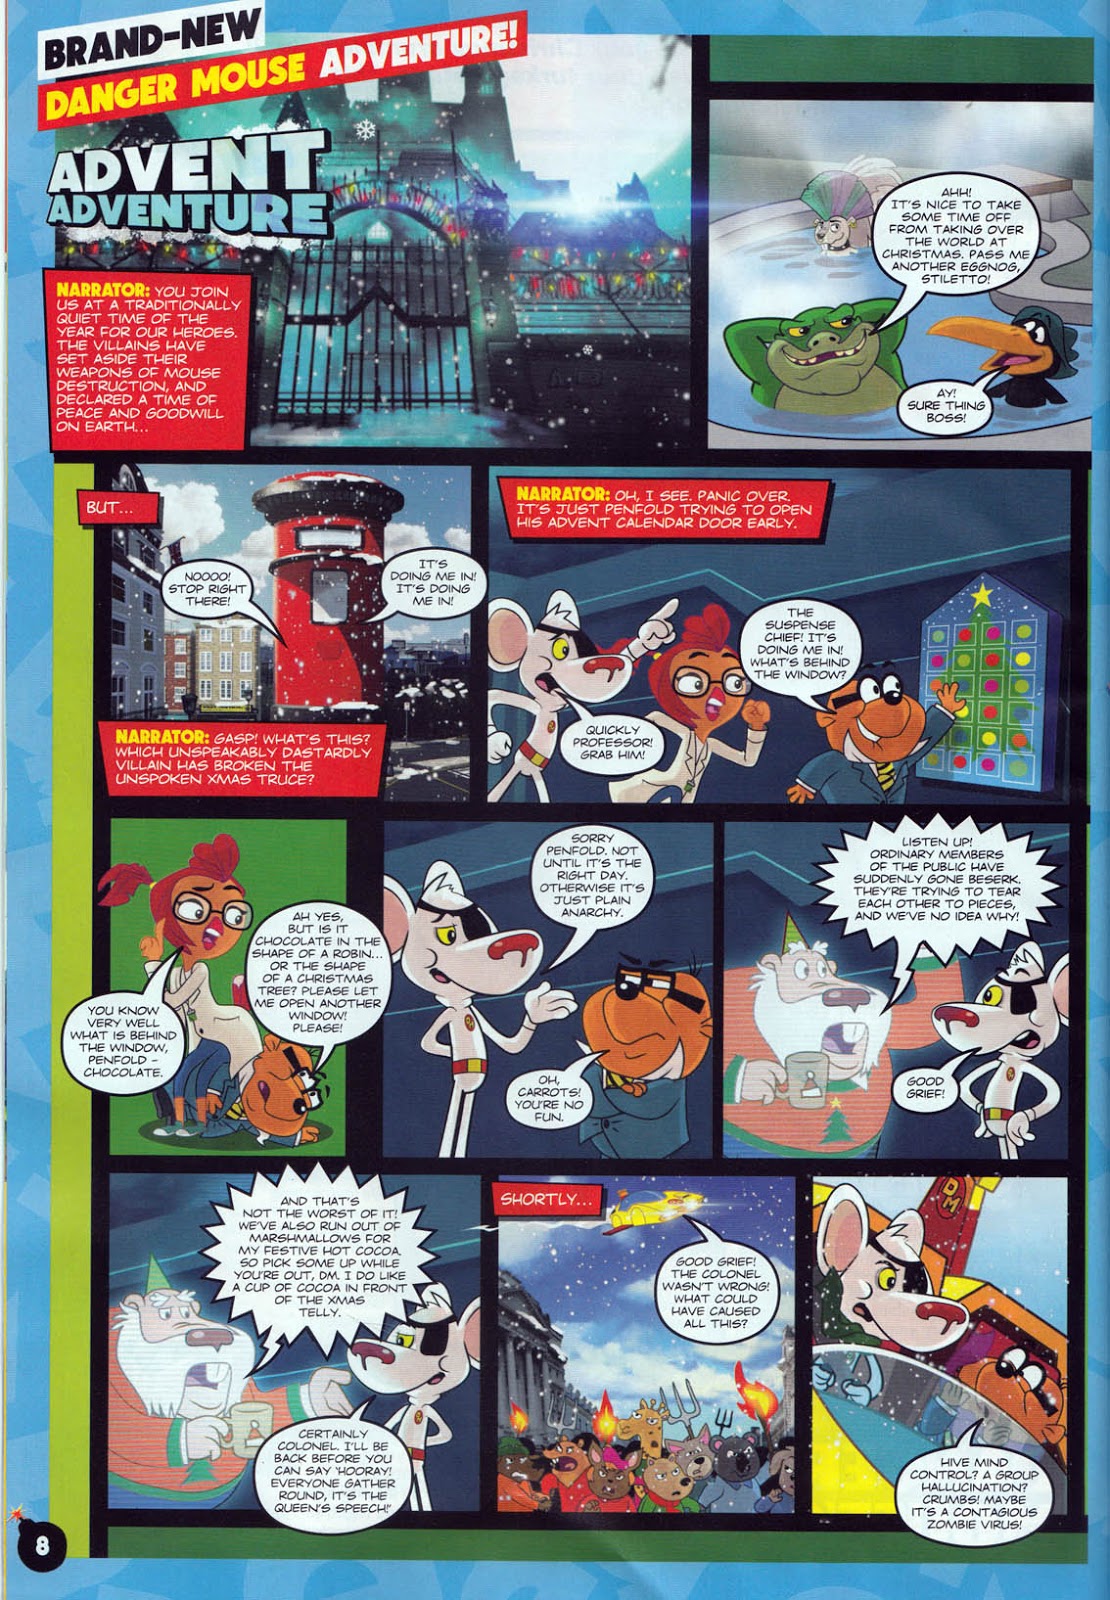 BLIMEY! Blog of British Comics: Christmas comics: DANGER MOUSE